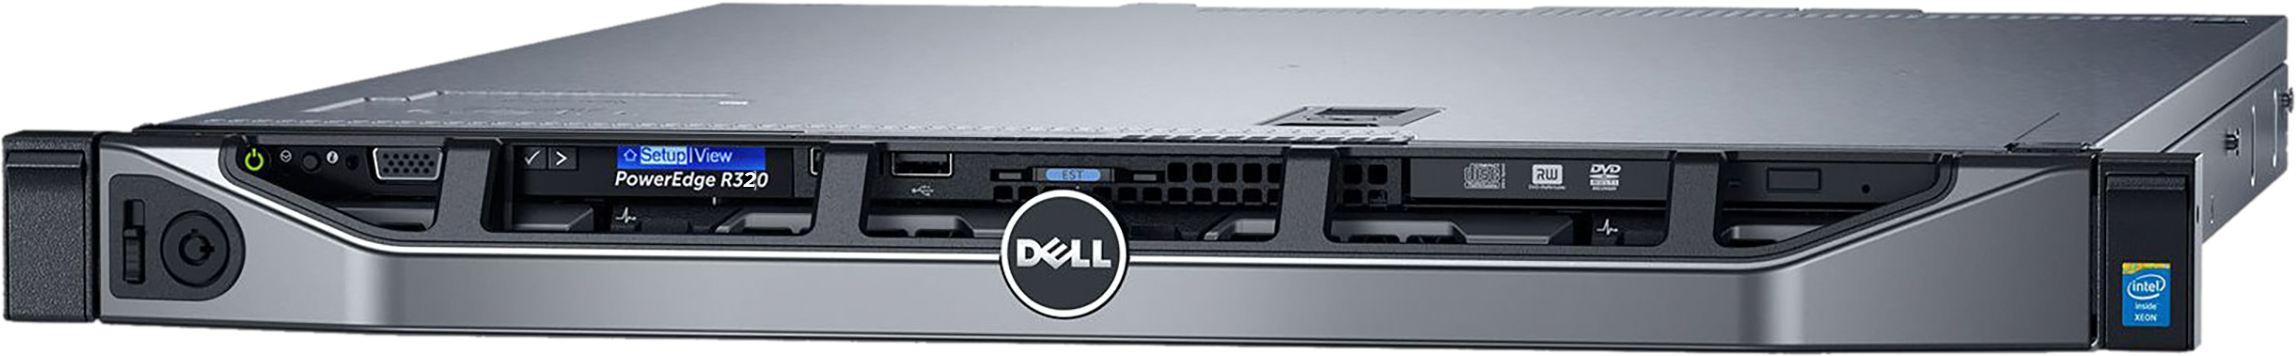 Аренда физического сервера DELL R320 / E5-2430 v2 / 16 GB RAM / 2 × 2 TB HDD / H310